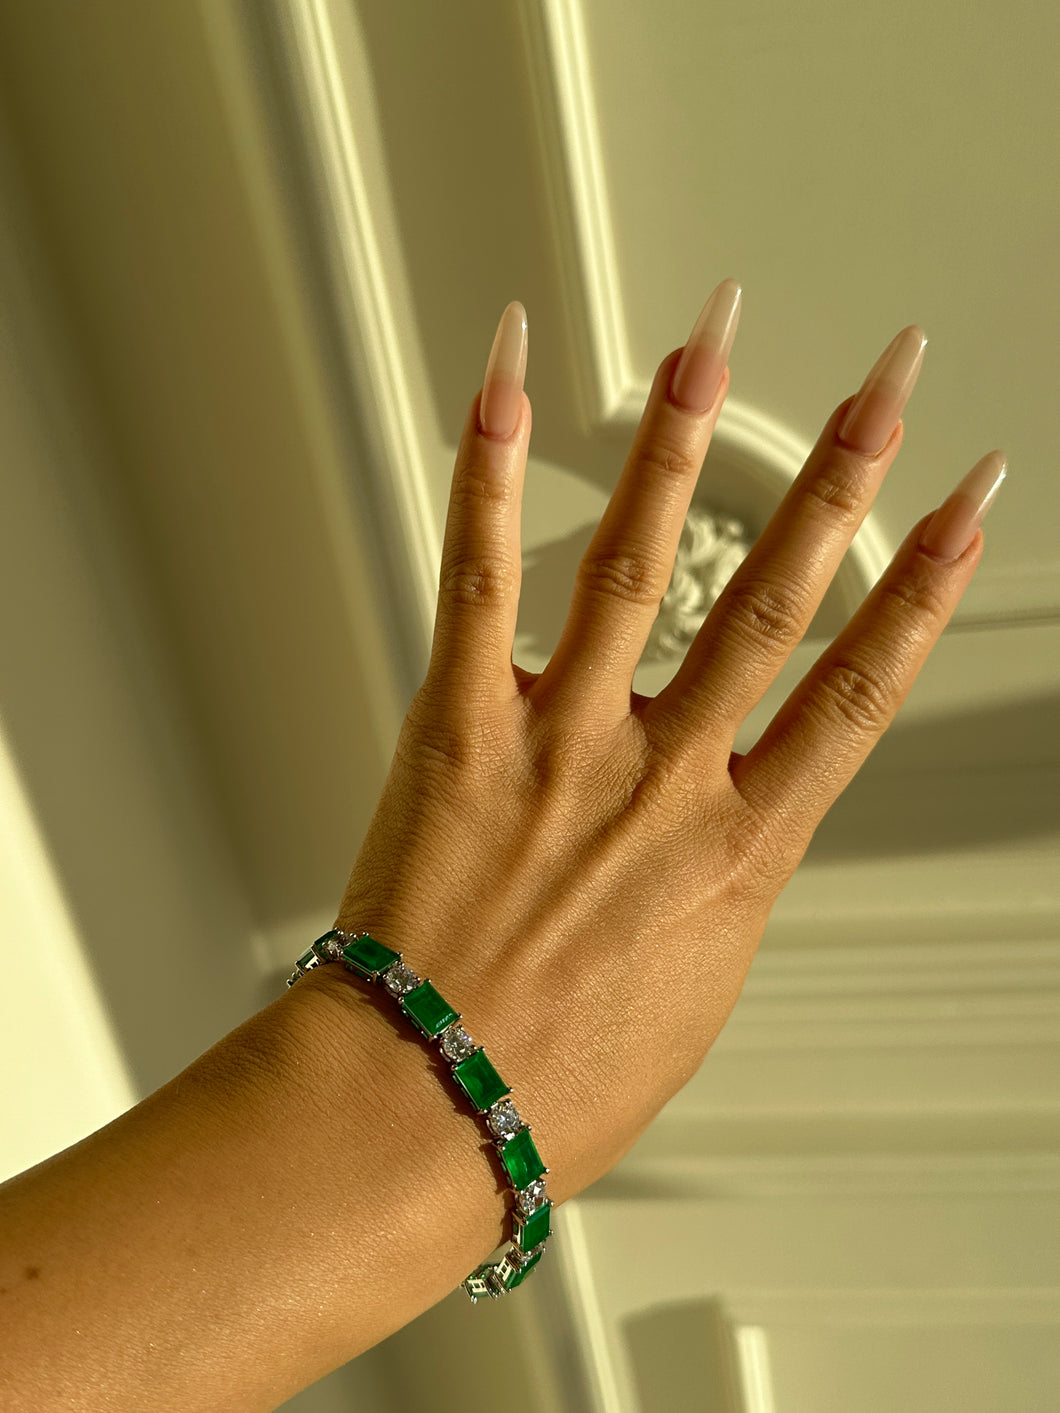 The Emerald Bracelet